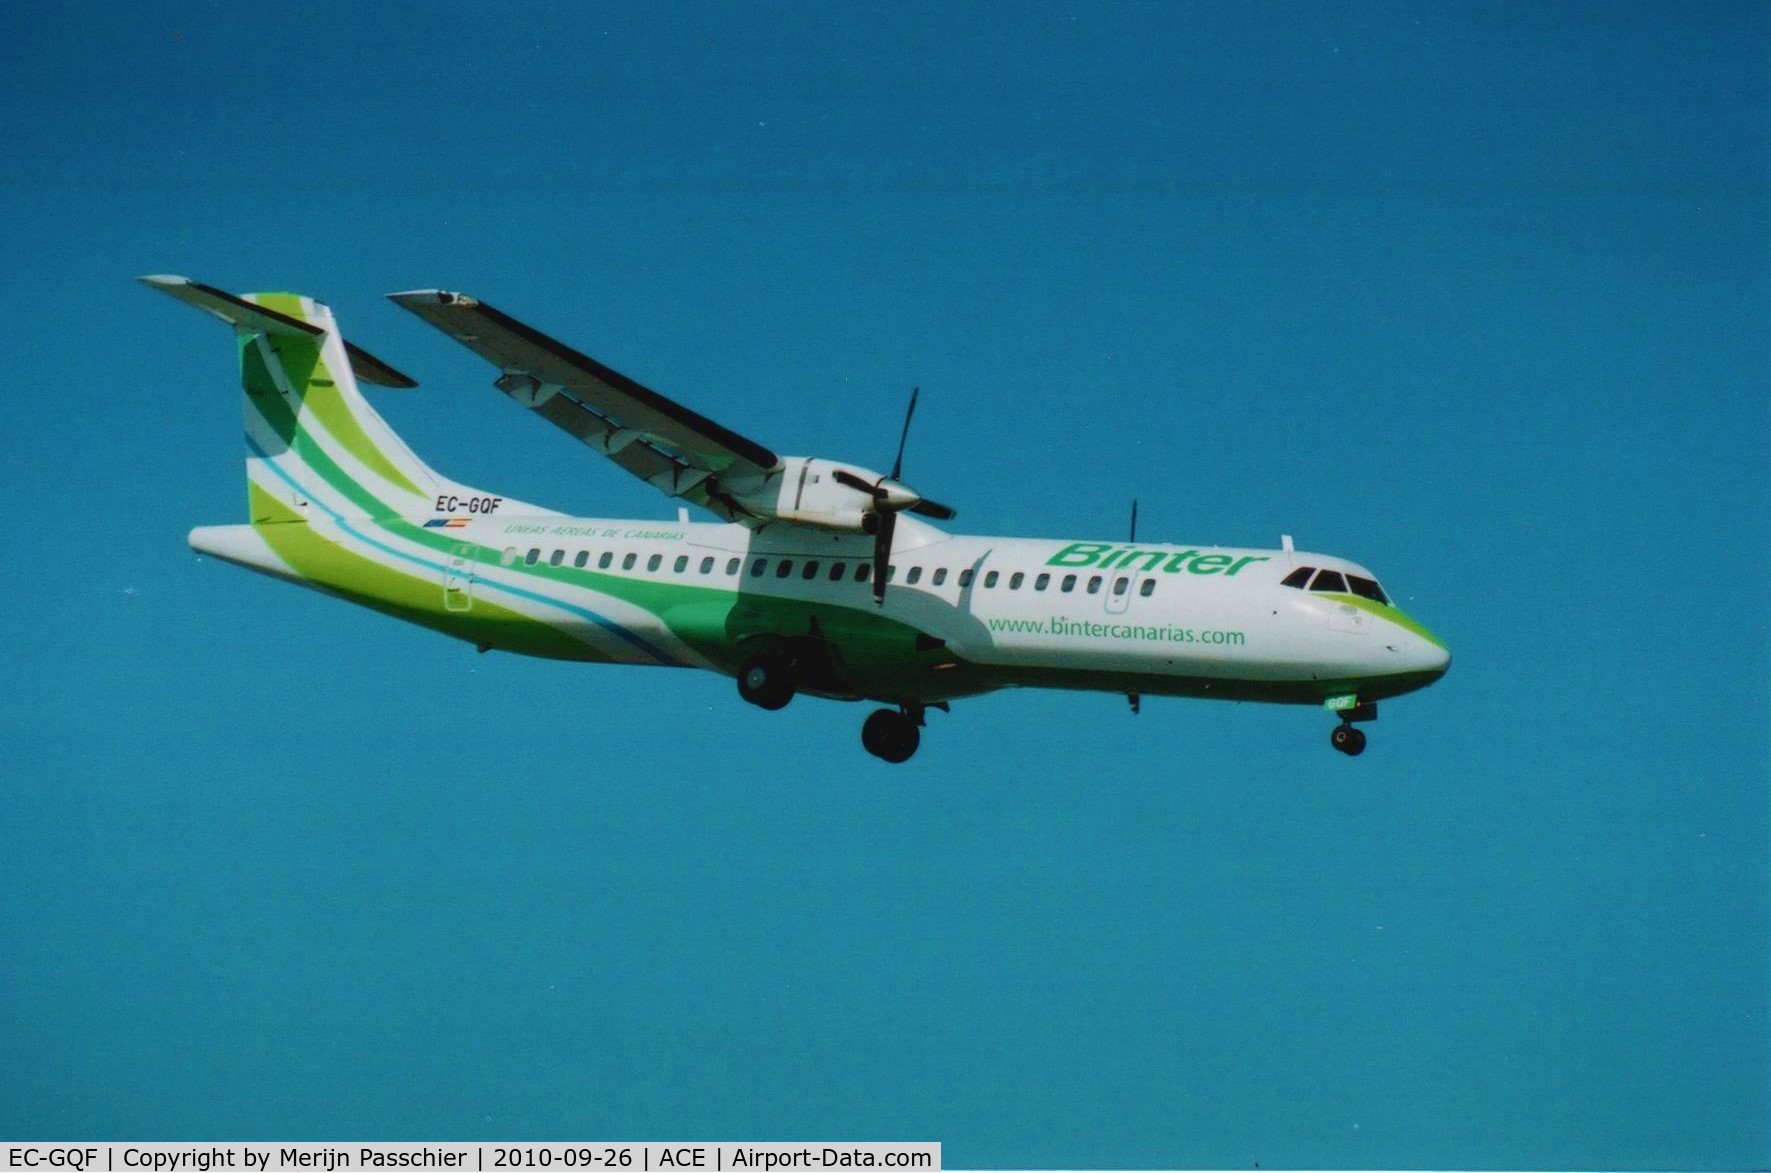 EC-GQF, 1996 ATR 72-202 C/N 489, bought photo